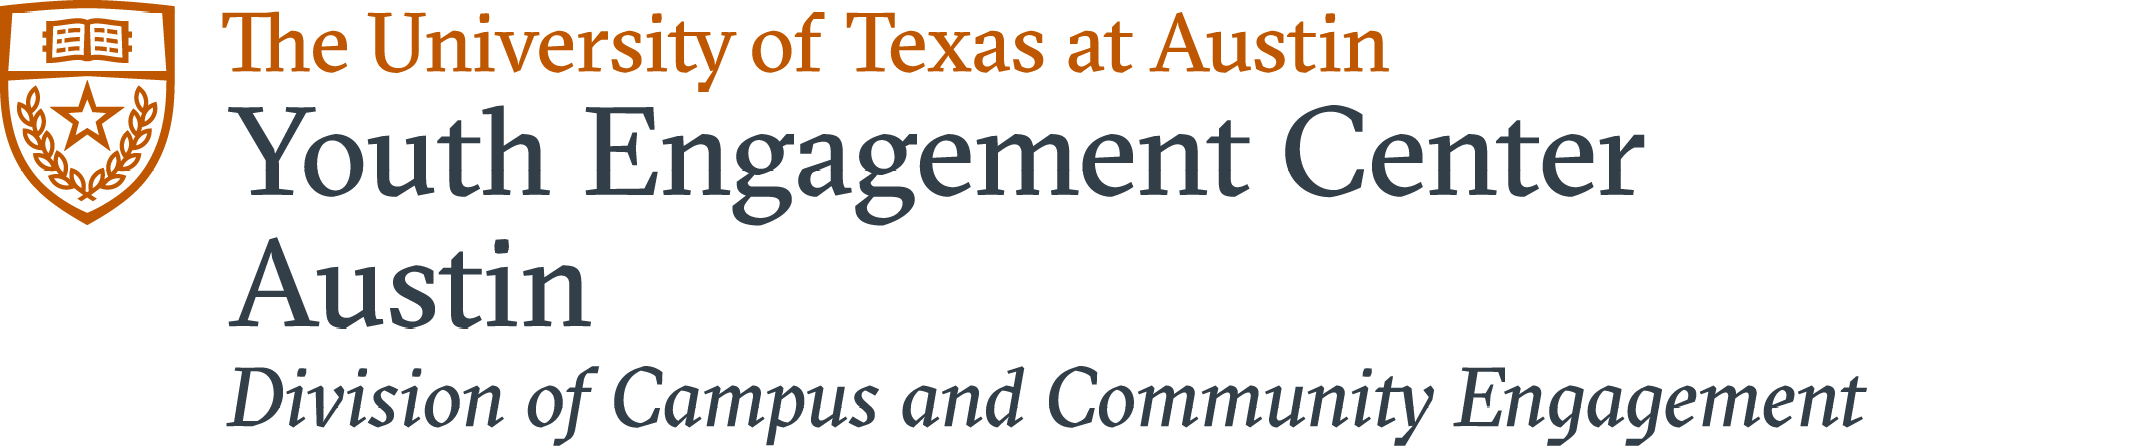 UT Youth Engagement Center - Austin